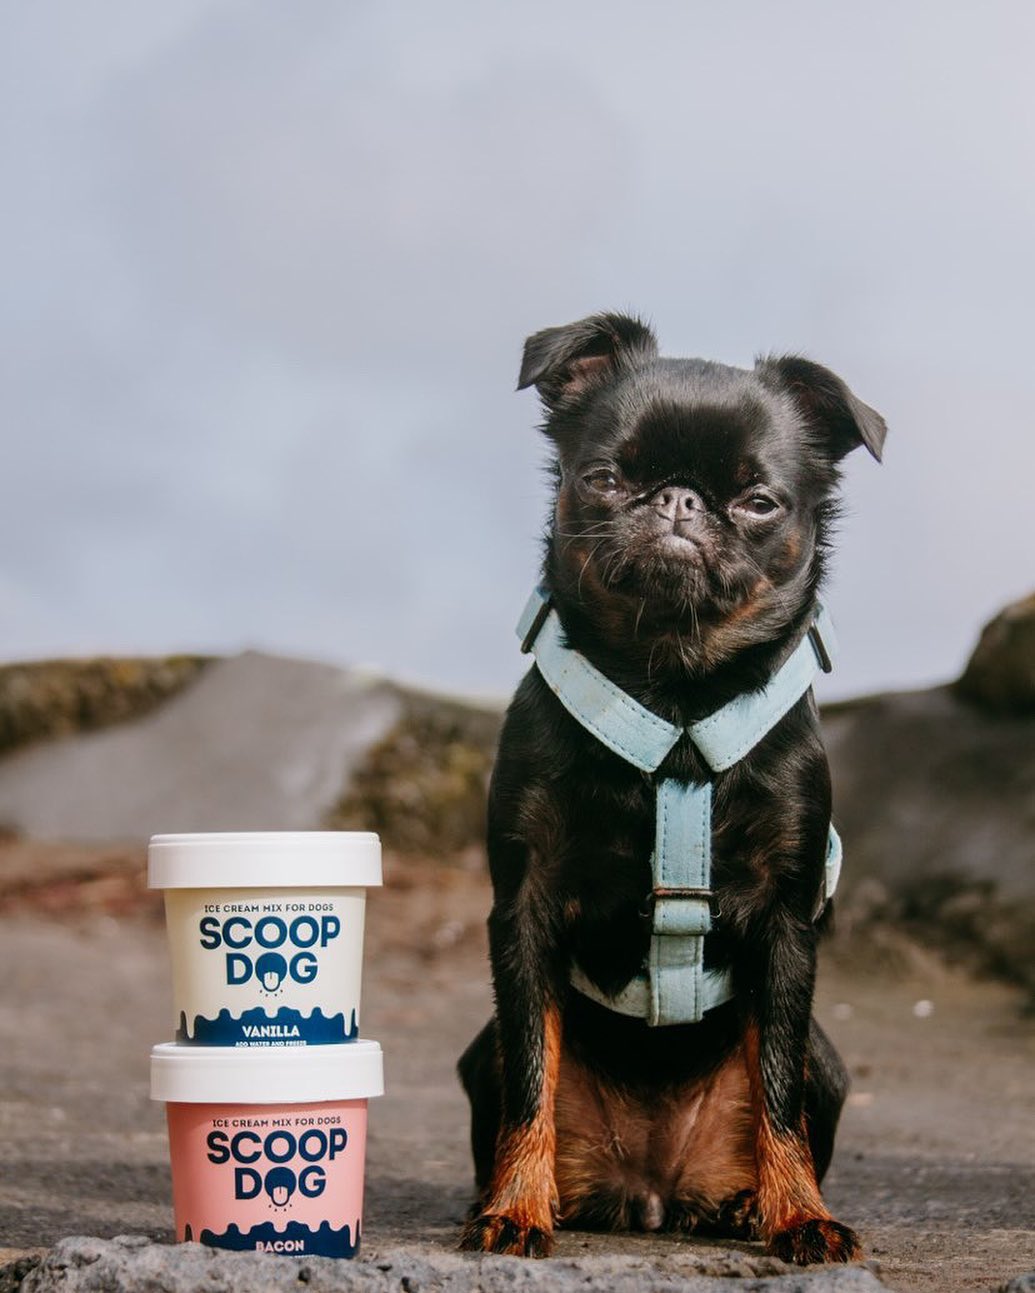 Vanilla Ice Cream Mix - Scoop Dog  